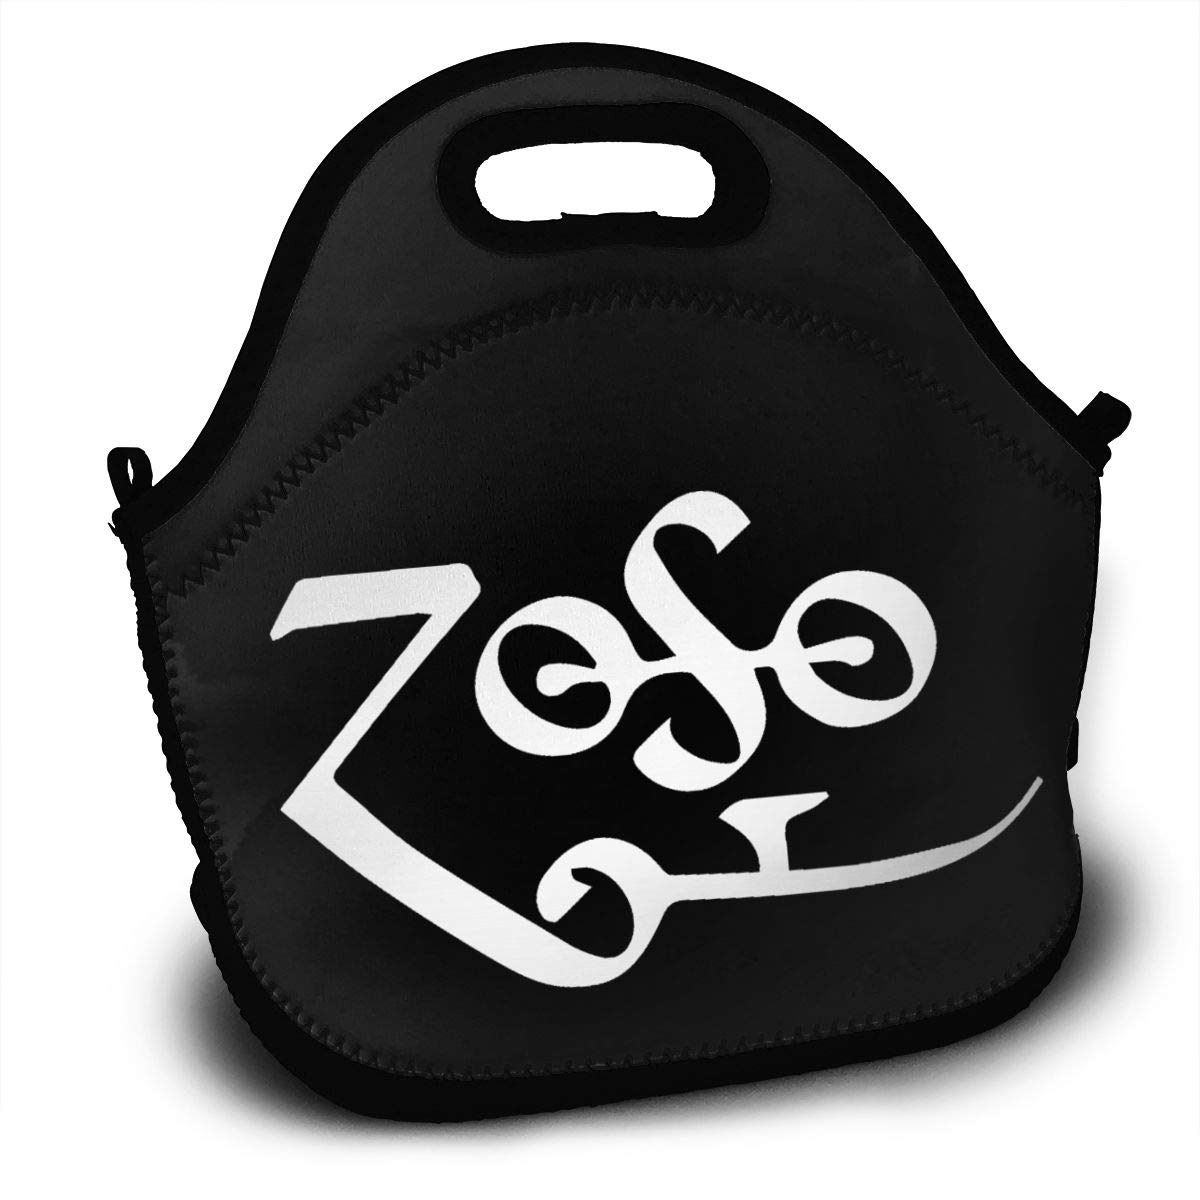 Zoso Logo - Amazon.com: BDBbuydd LED Zeppelin Zoso Logo Lunch Bag Tote Handbag ...